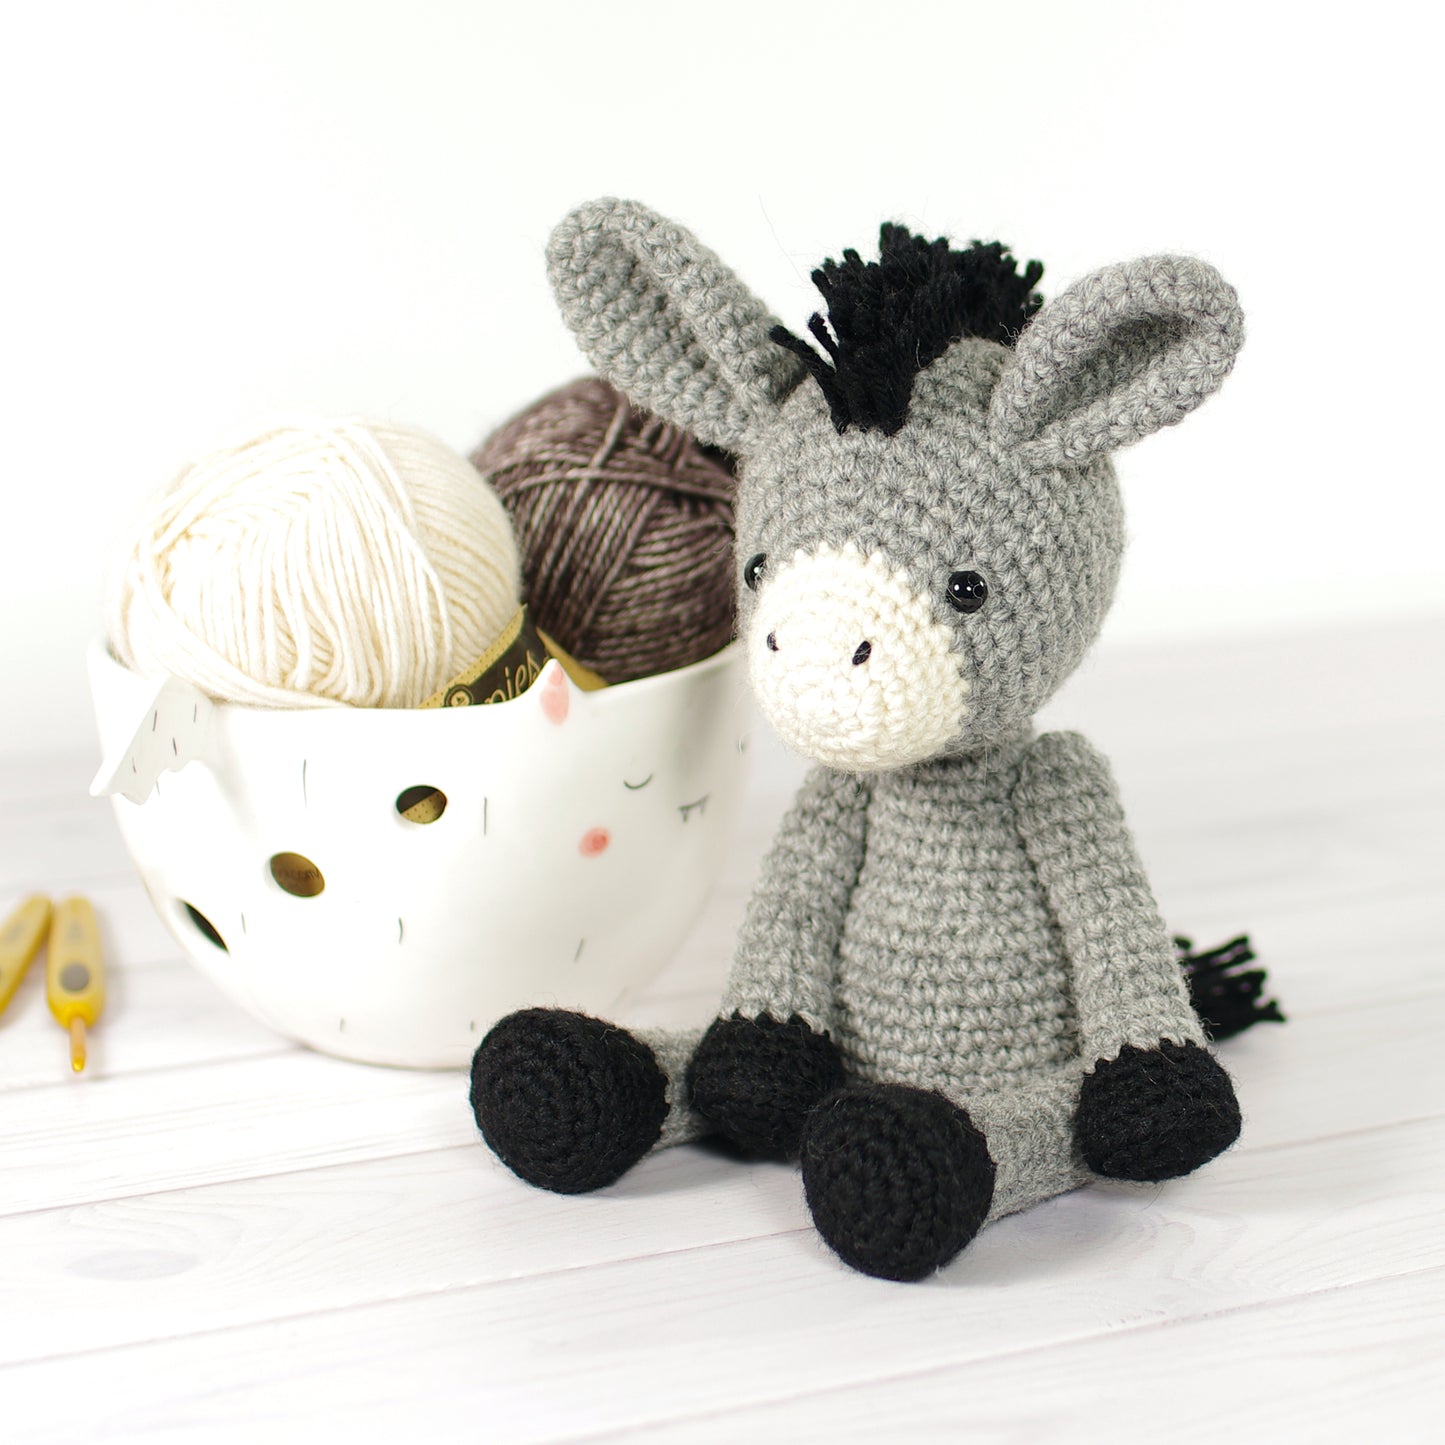 Cute crocheted donkey tutorial